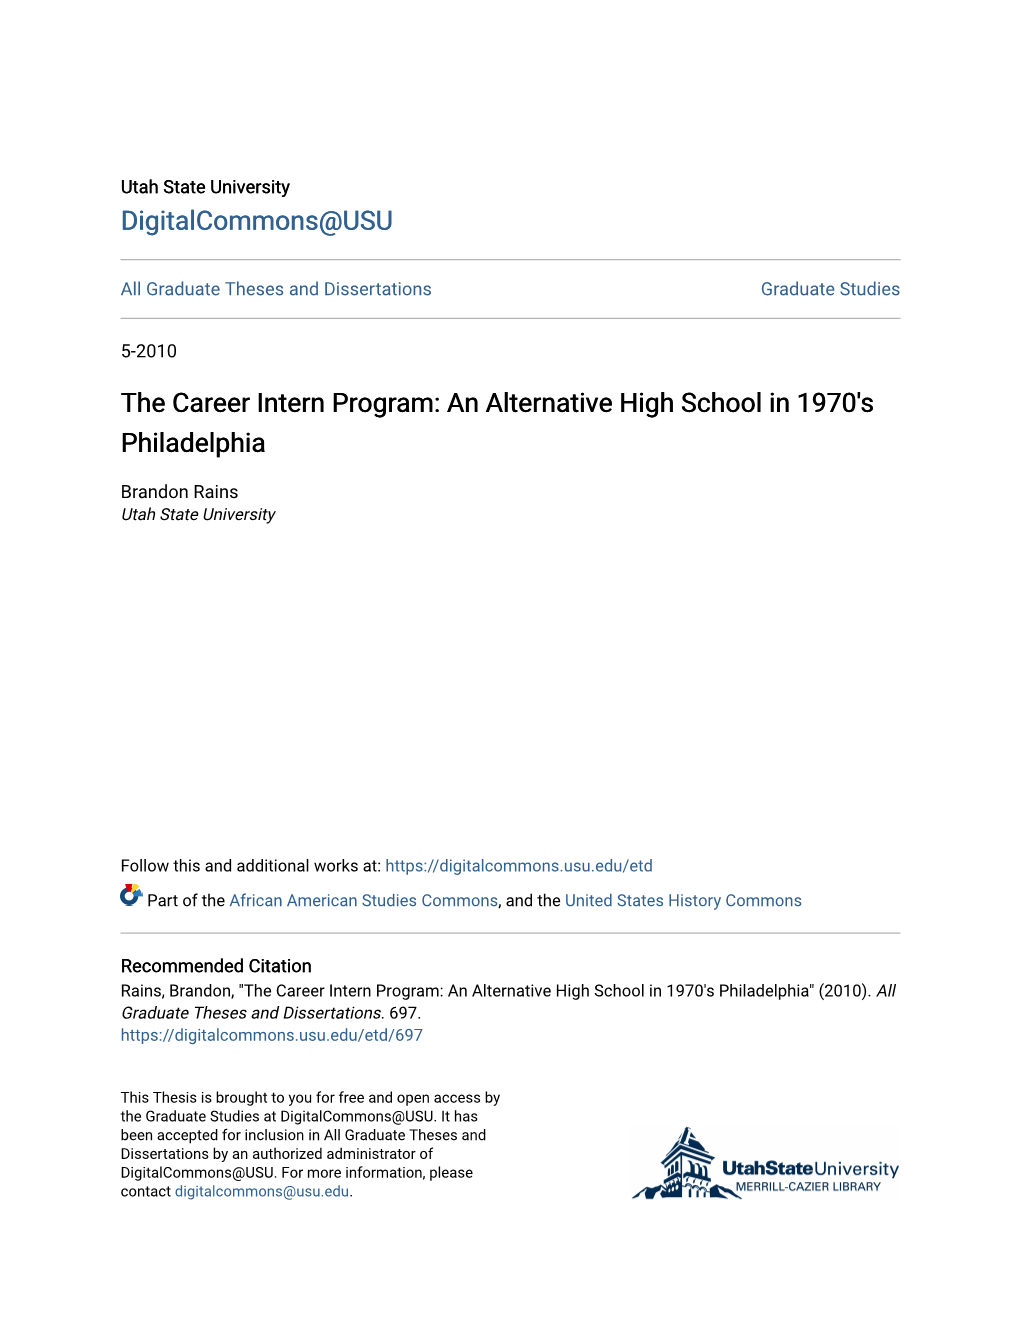 The Career Intern Program: an Alternative High School in 1970'S Philadelphia